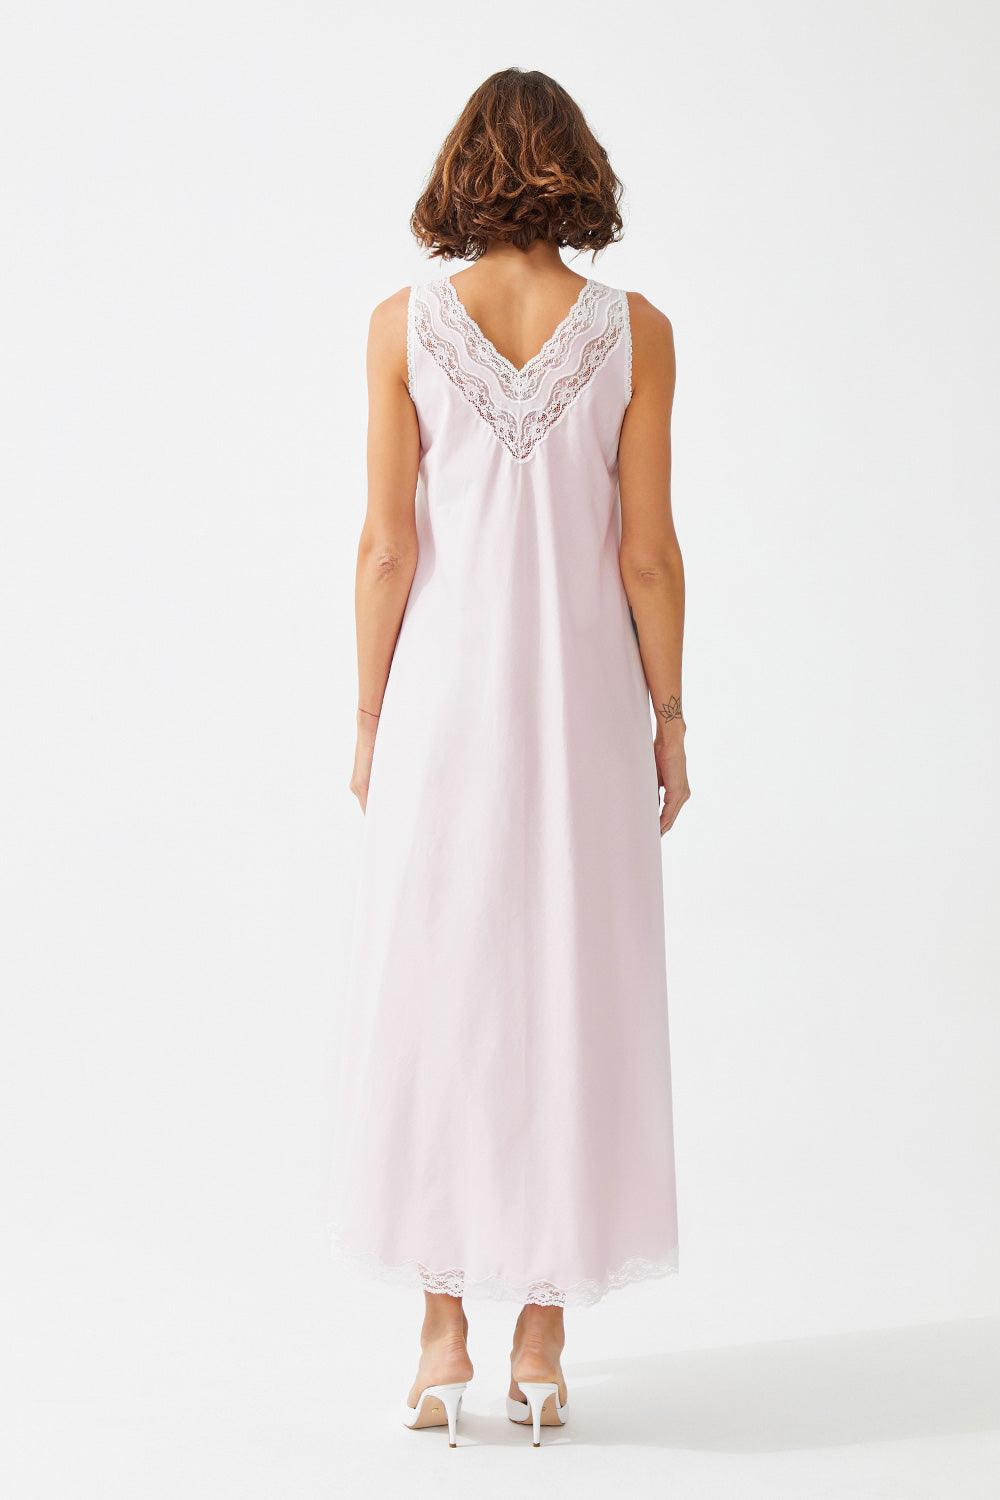 Quartz Long Cotton Voile Sleeveless Inner Nightgown - Baby Pink - Bocan